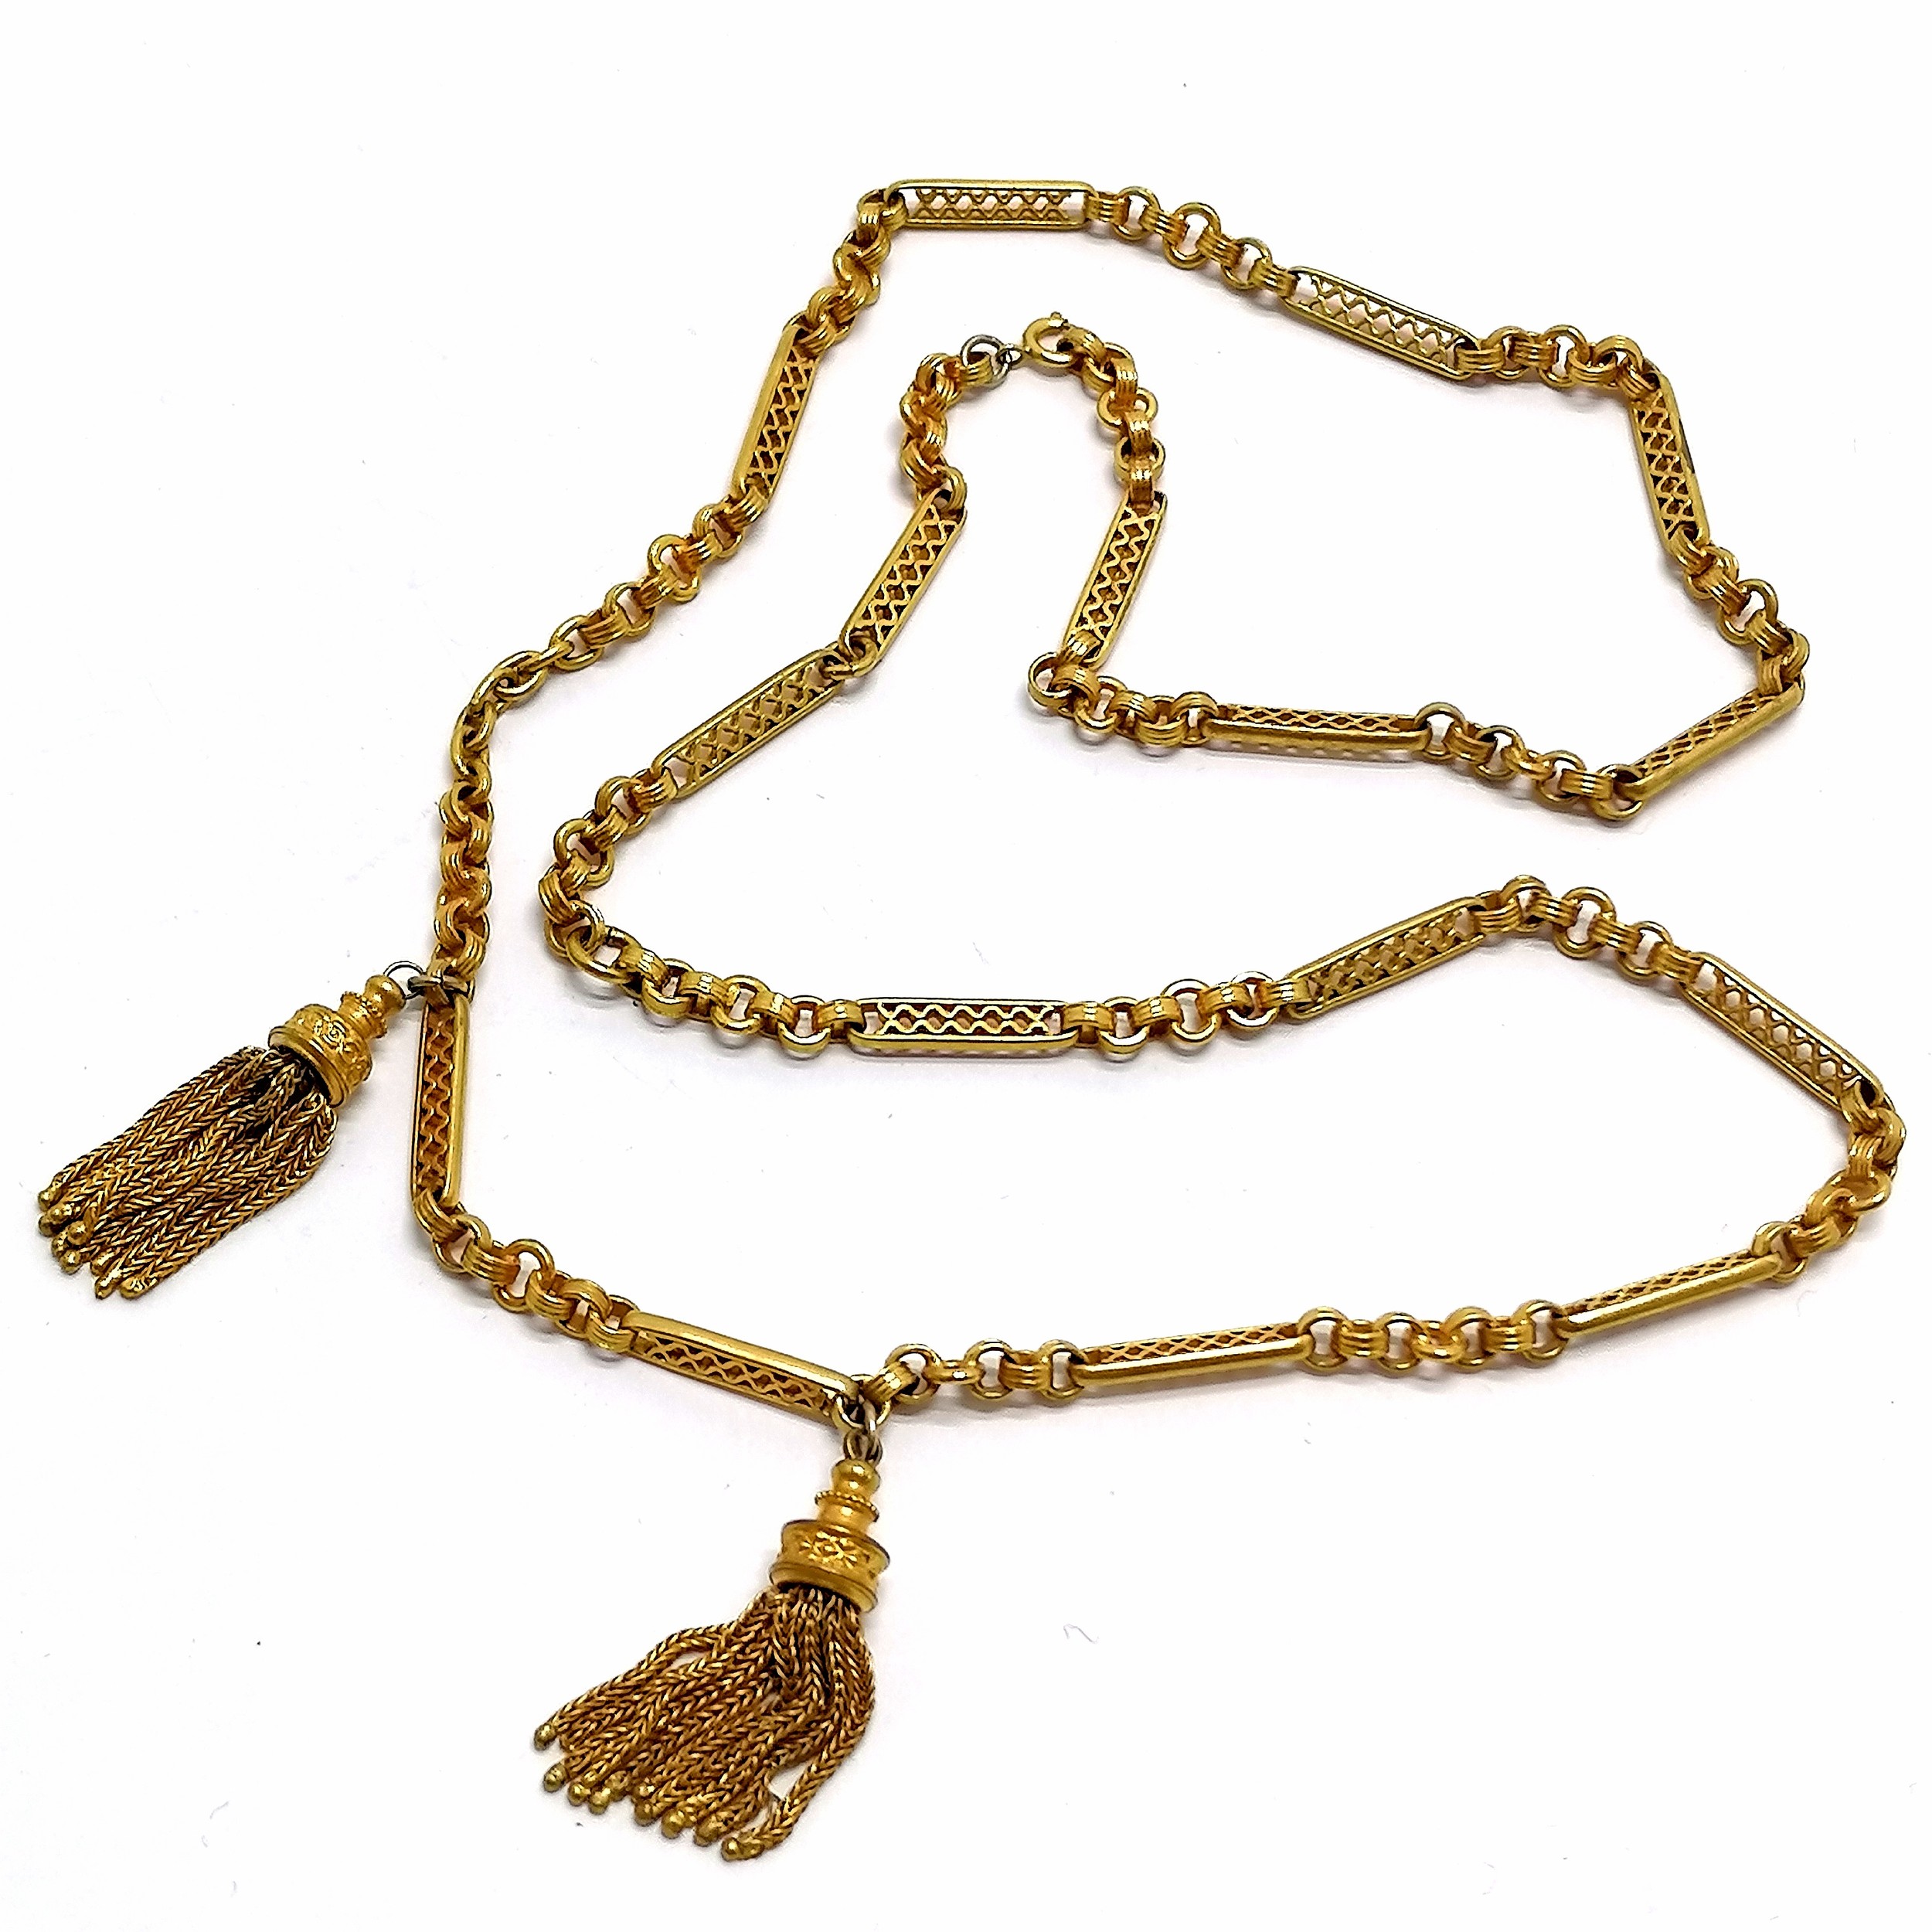 Antique fancy link gilt metal neckchain with 2 tassel detail - 60cm long & no obvious damage - Image 2 of 2